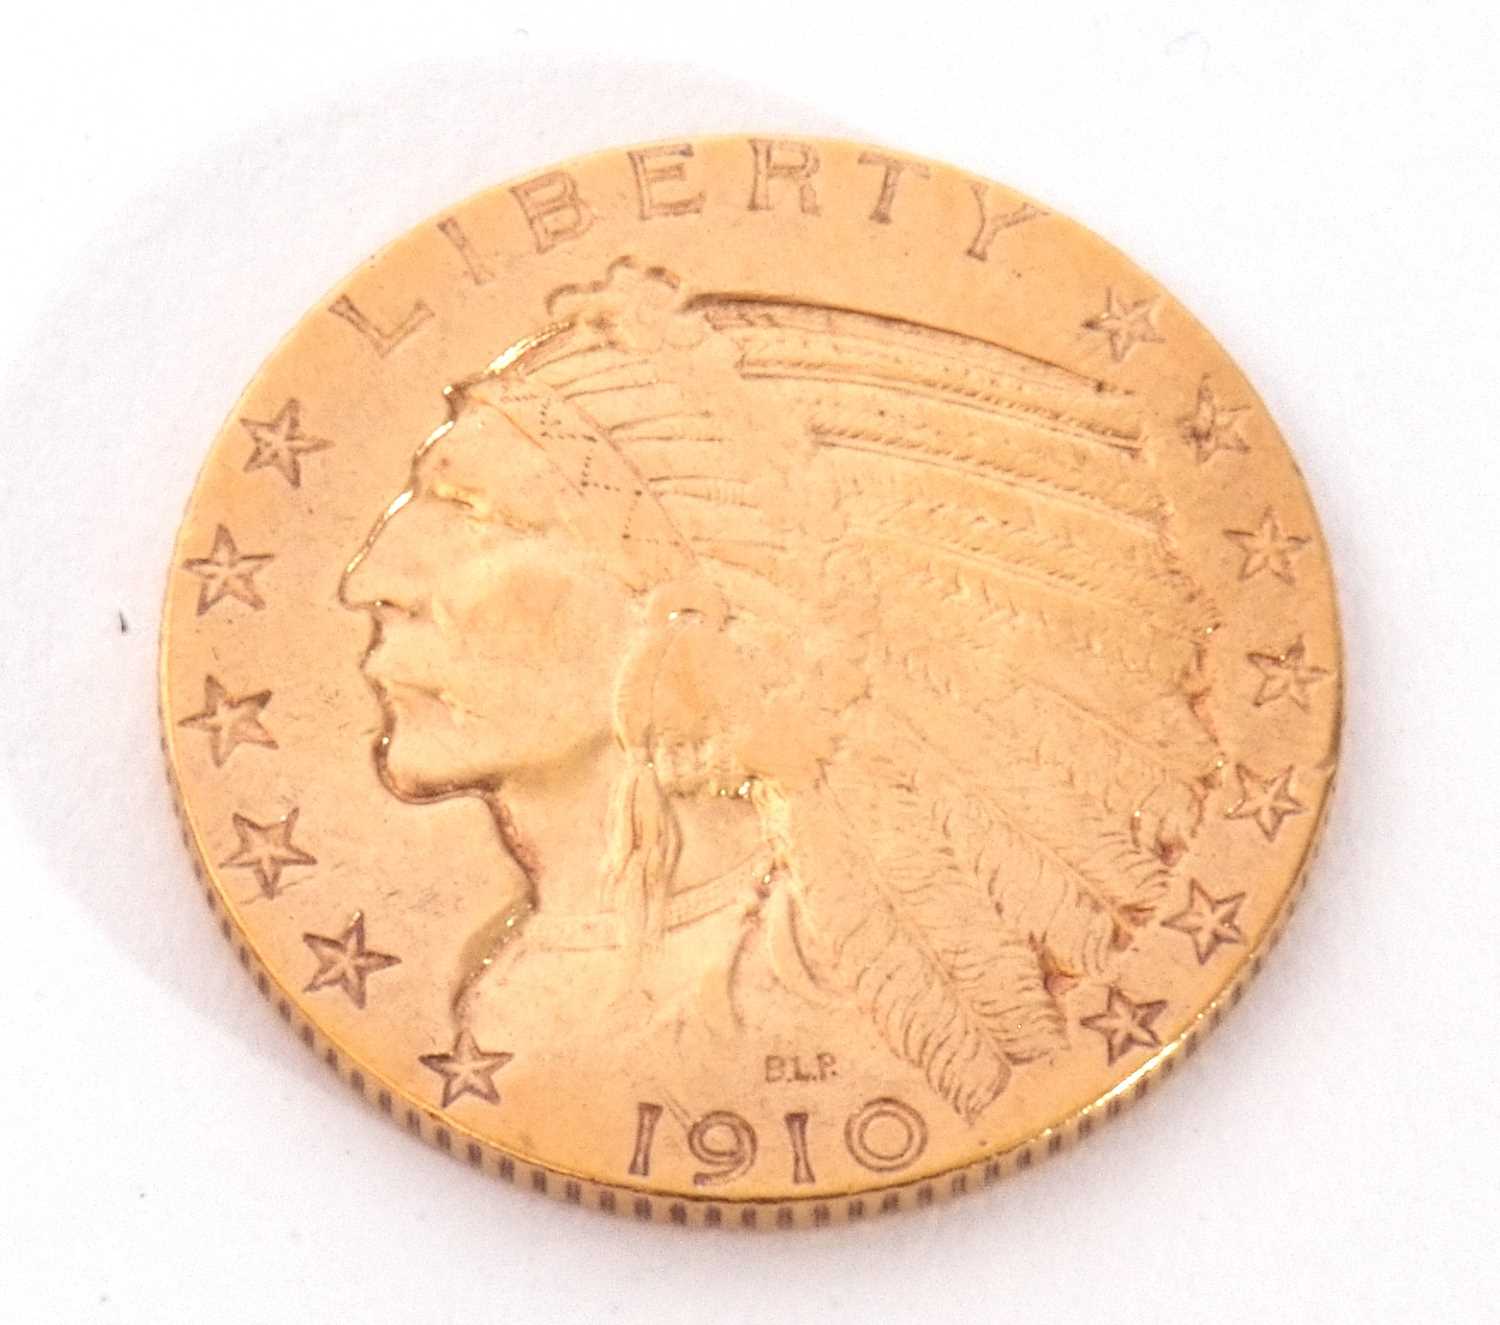 USA 1910 Indian head half Eagle coin